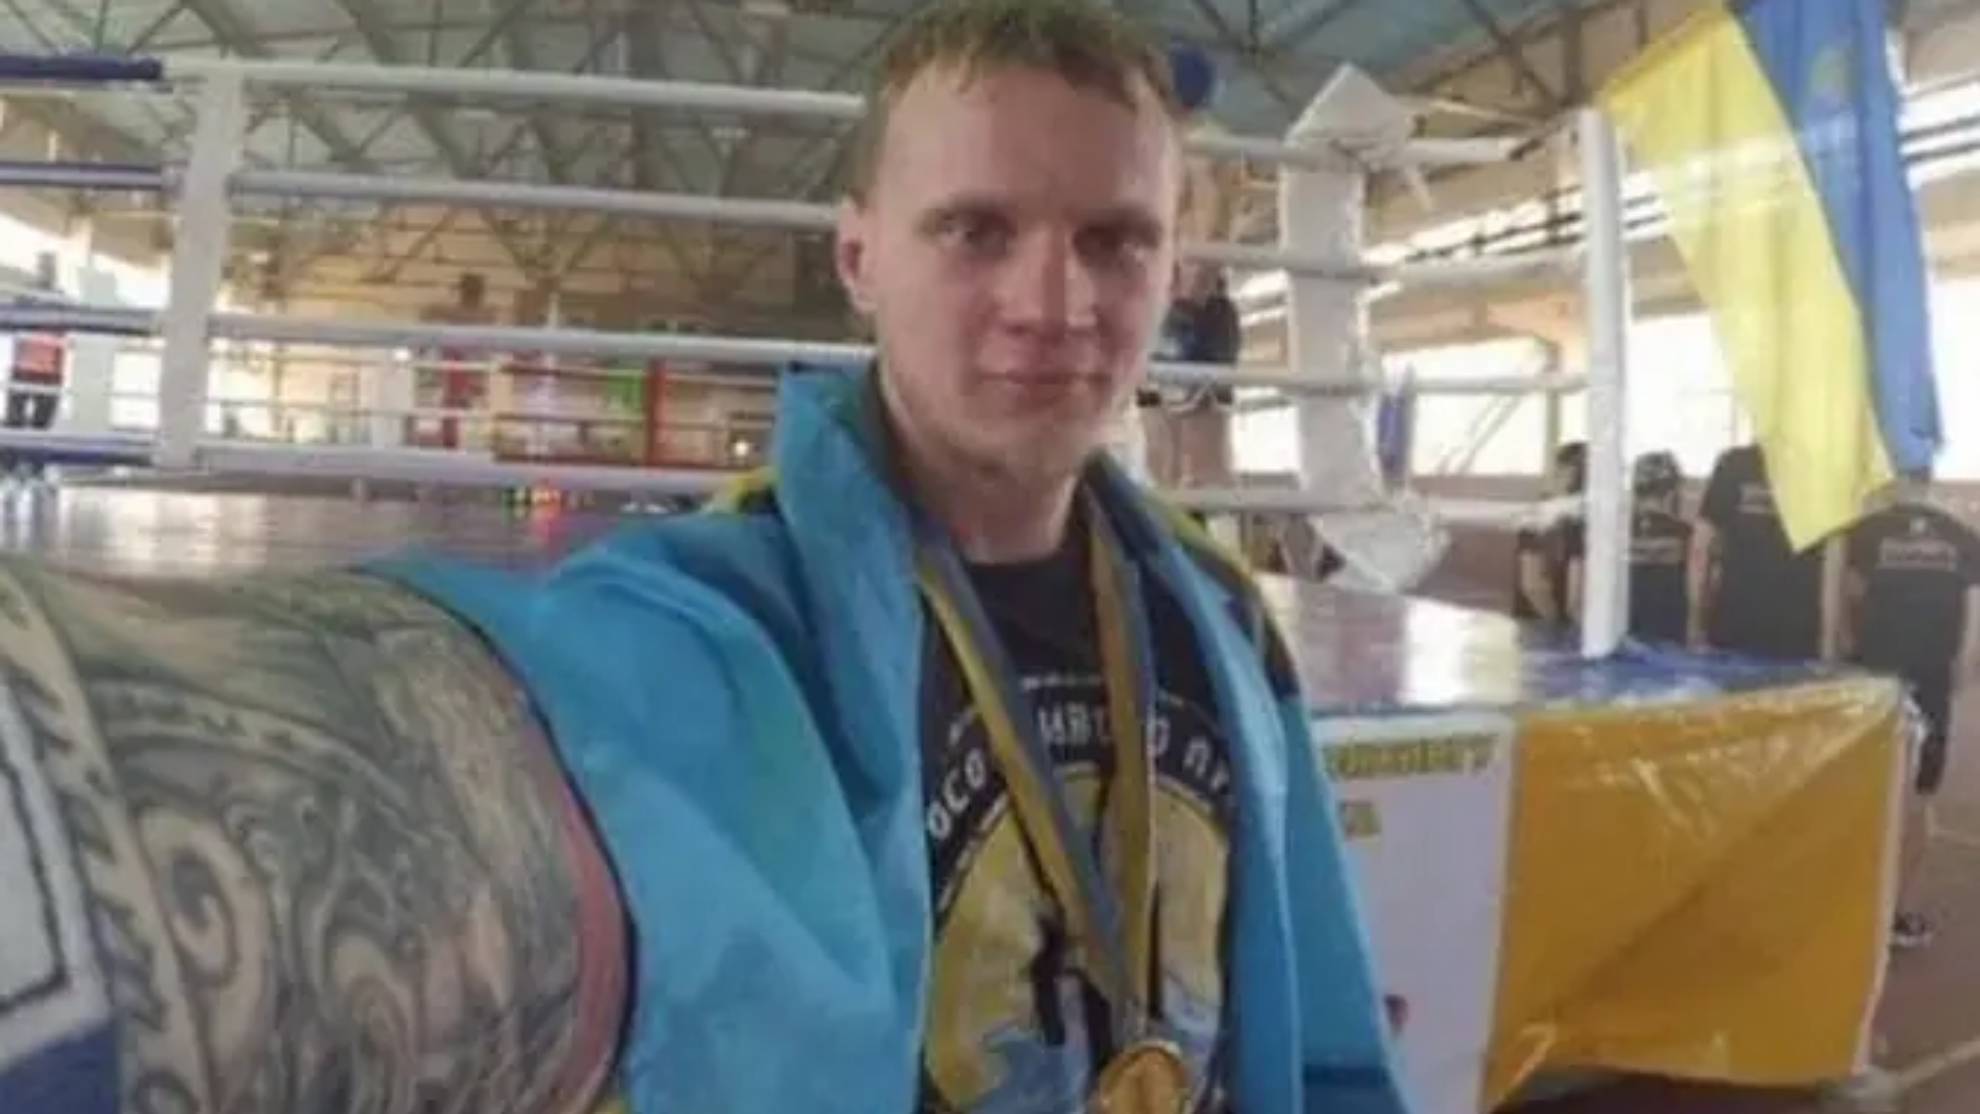 Oleg Skirta informó de la muerte de Maksym Kagal, campeón del mundo de kickboxing, en la batalla de Mariupol